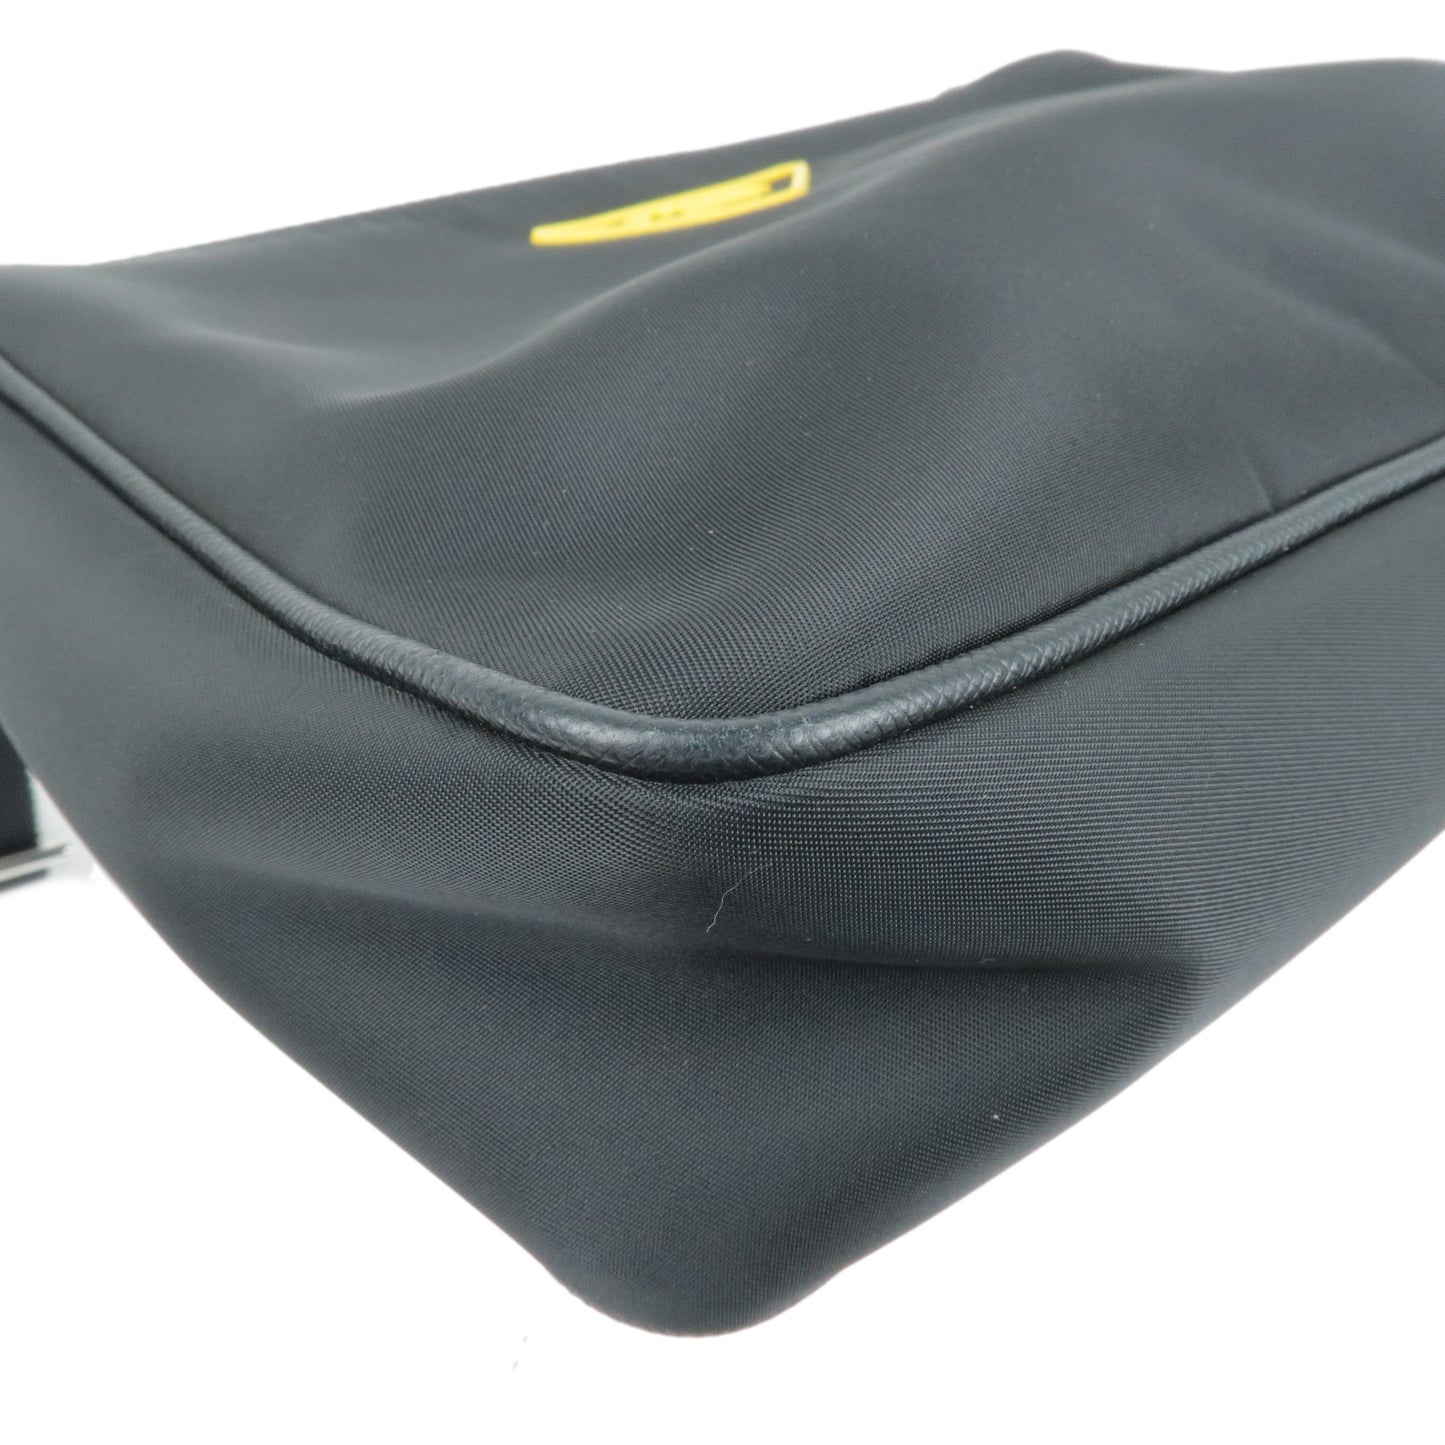 PRADA Logo Nylon Leather Shoulder Bag Black Yellow 2VH113